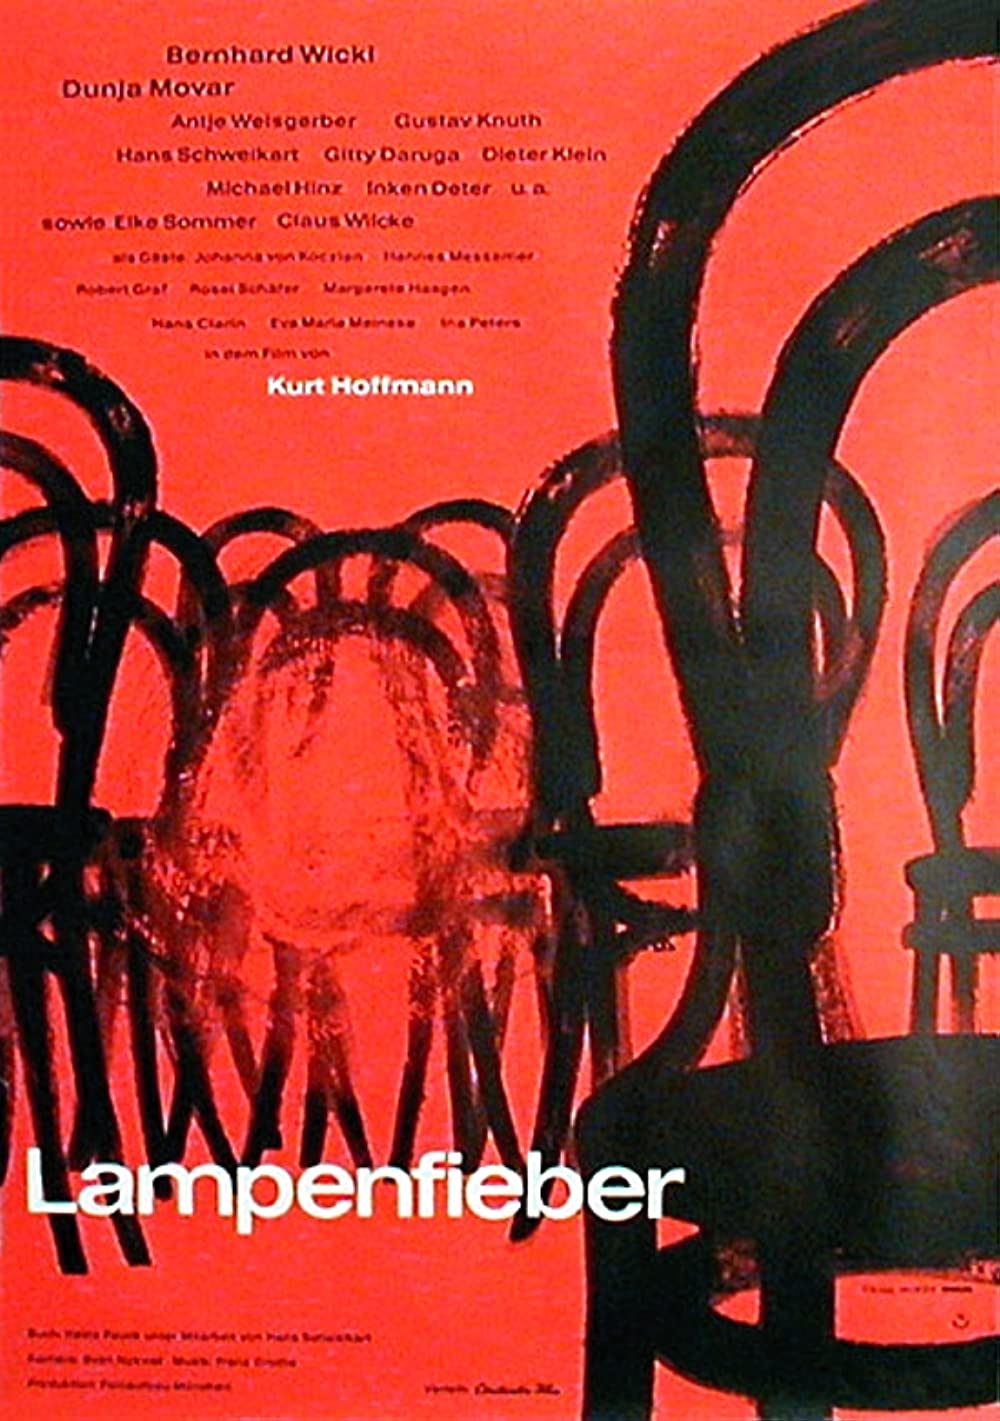 Lampenfieber (1960)